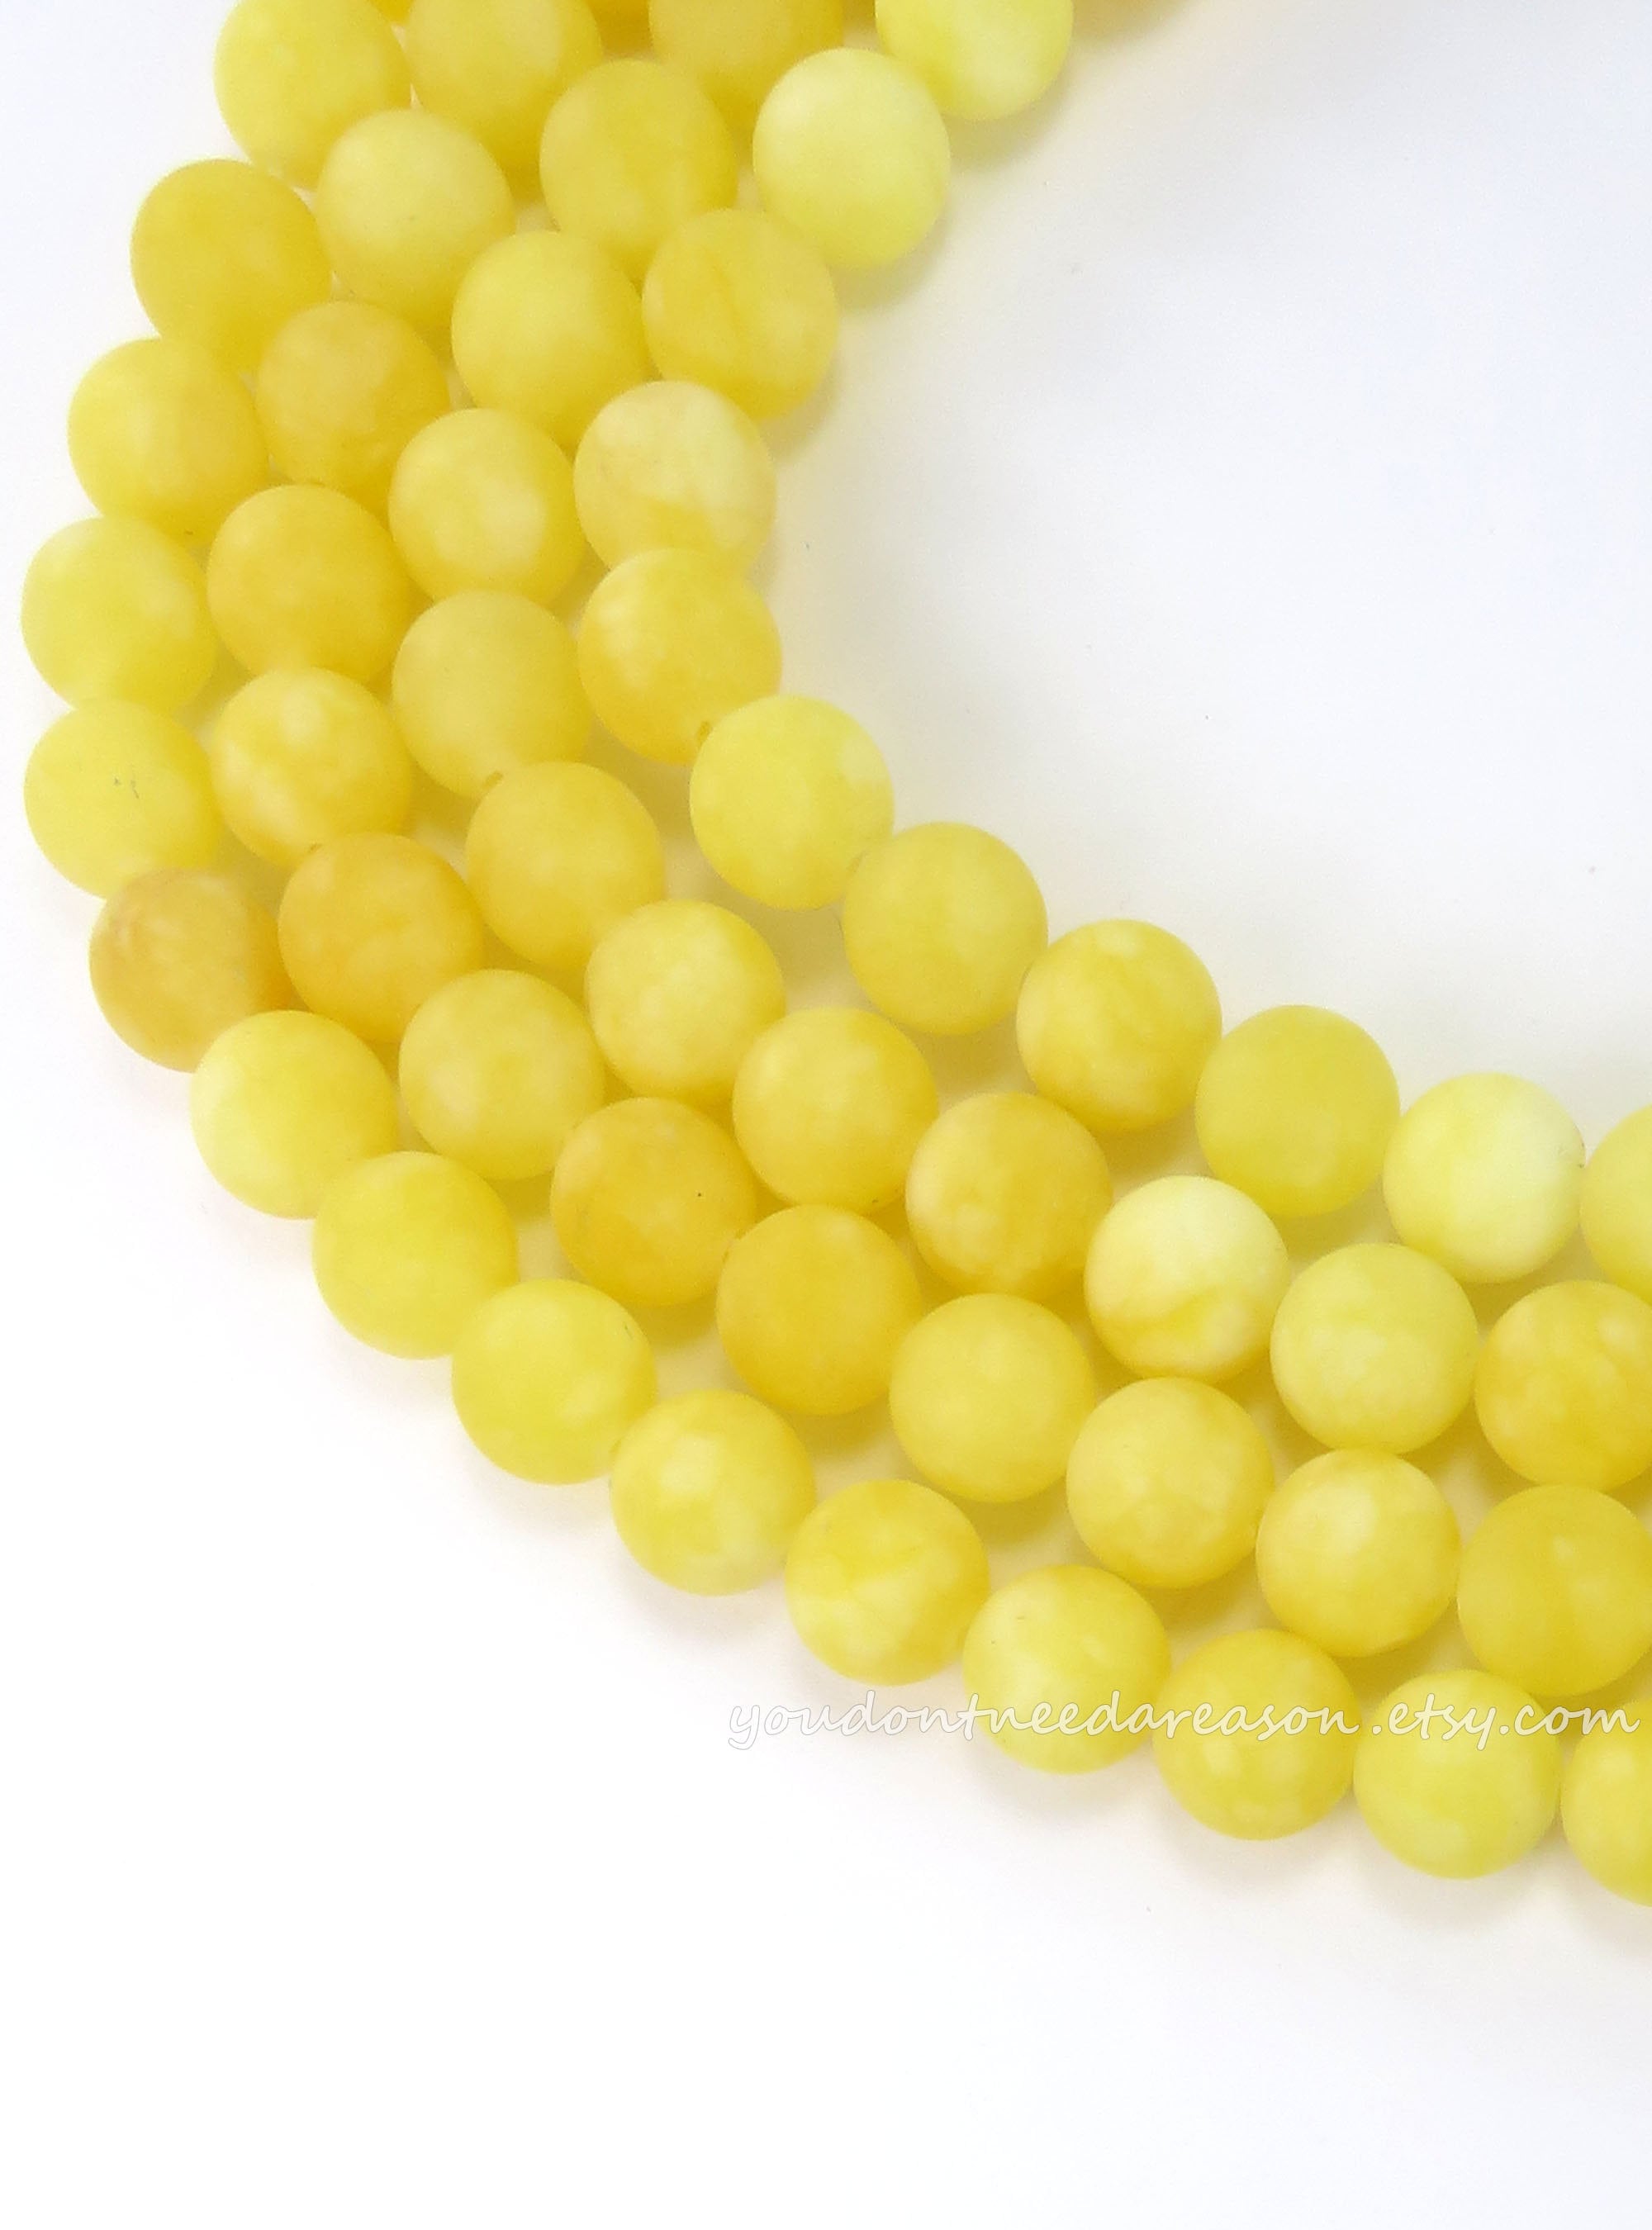 8mm Natural Mashan Jade Beads for Jewelry Making Smooth Round Gemstone  Beads Colorful Mashan Jade Beads Discontinued 